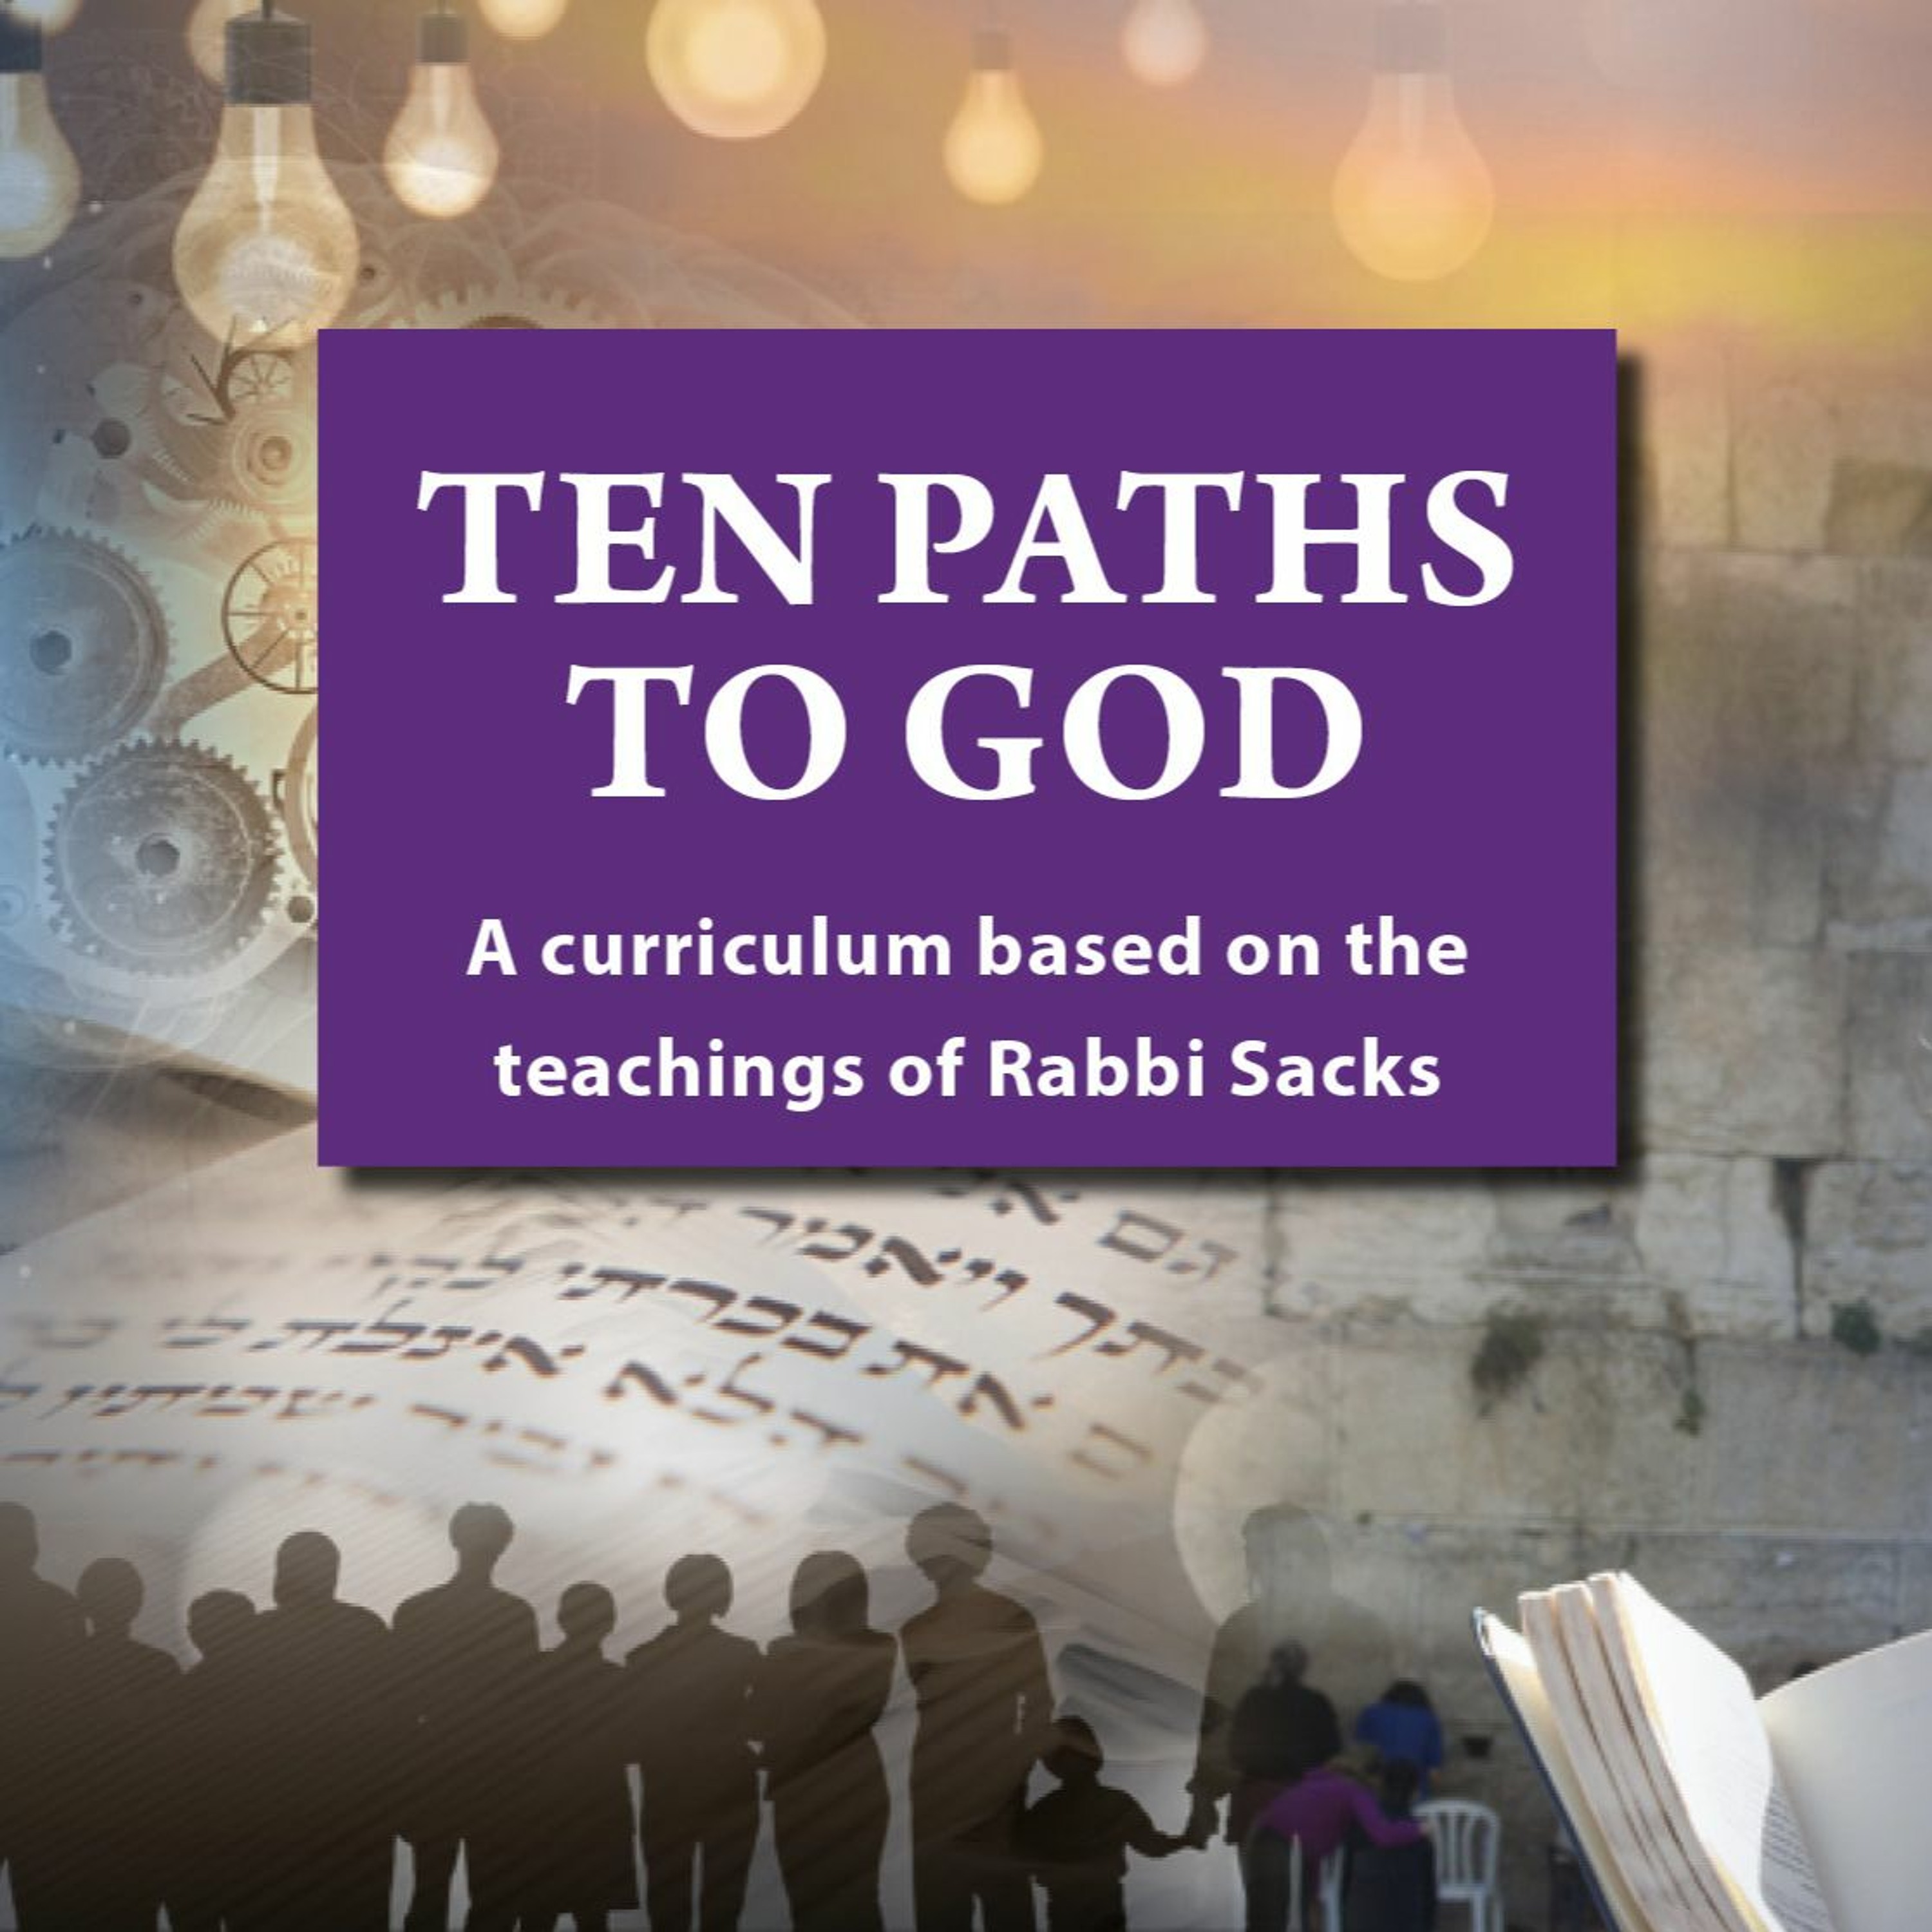 The Way of Tzedakah: Love As Justice (Ten Paths To God - Unit 5)